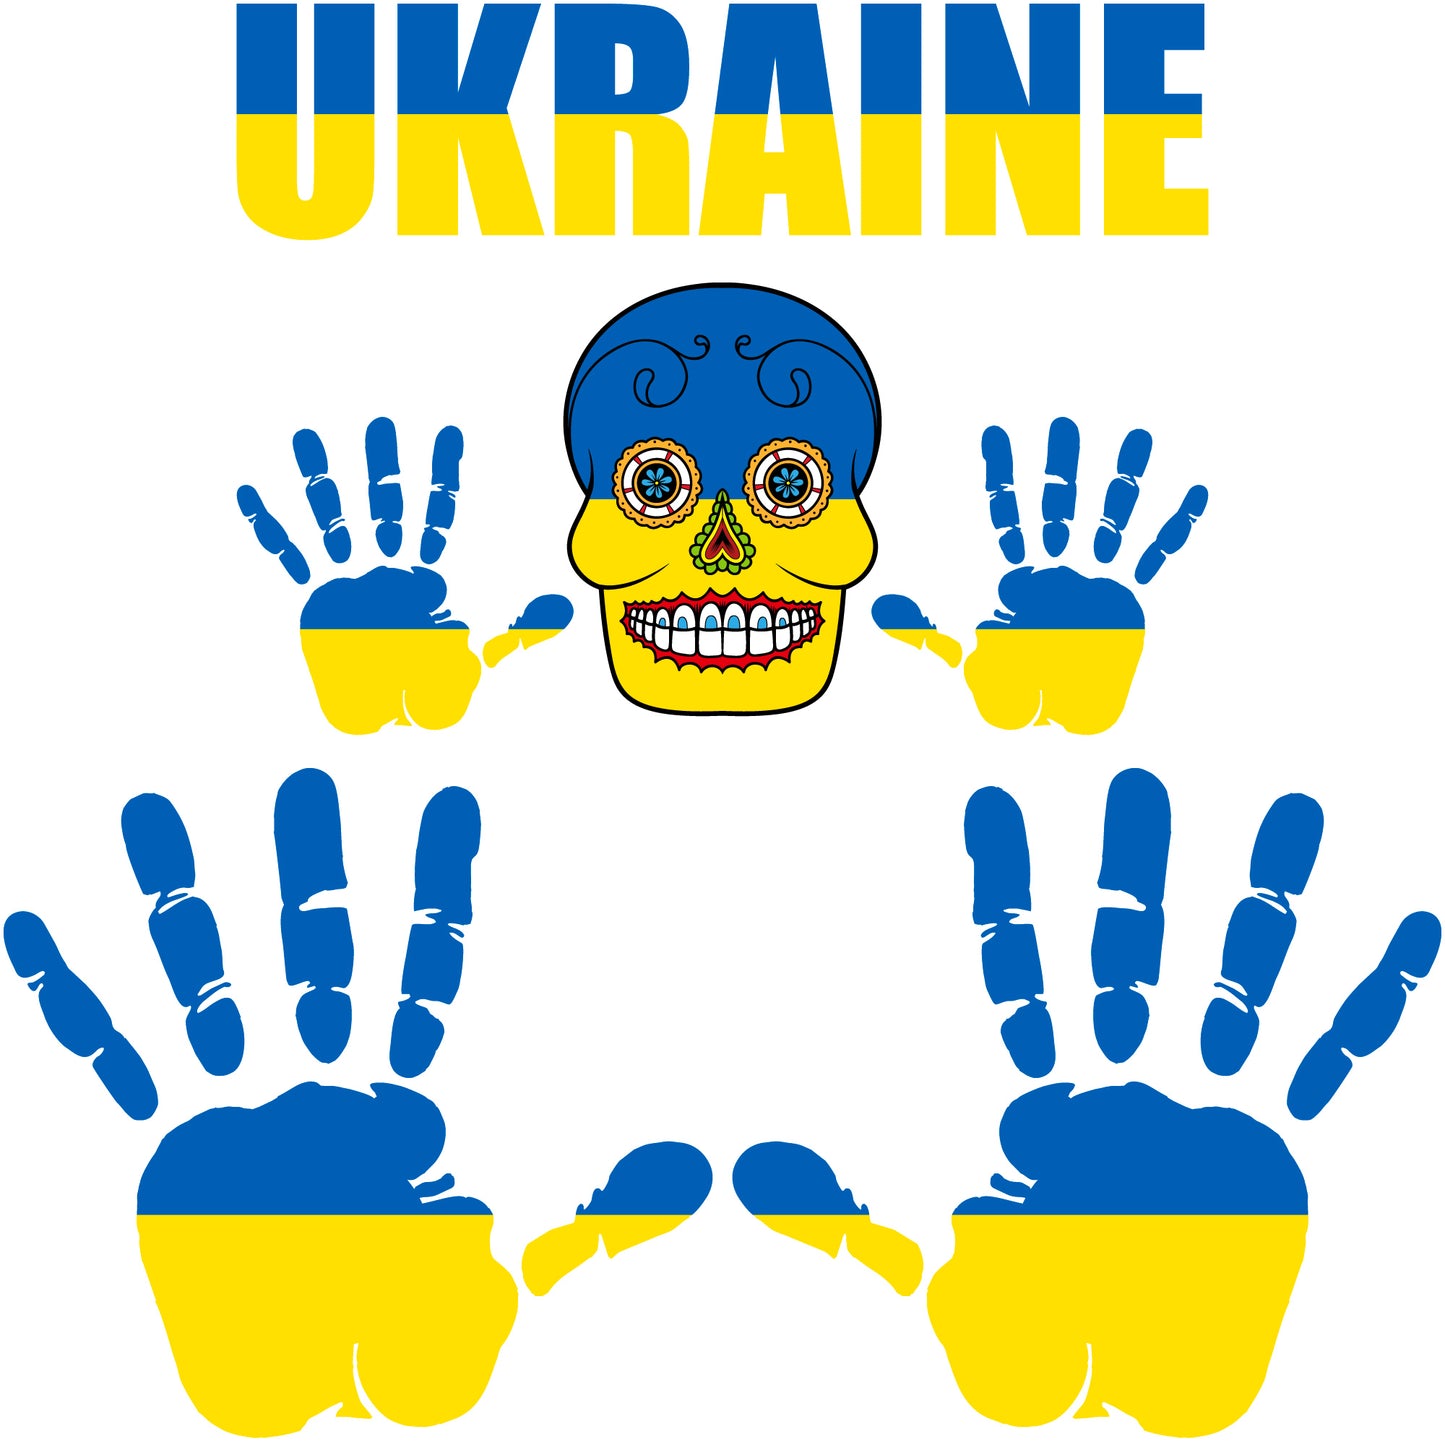 Aufkleber - Ukraine - Fahne - Set - Skull - Hand - Schriftzug - 6-teilig